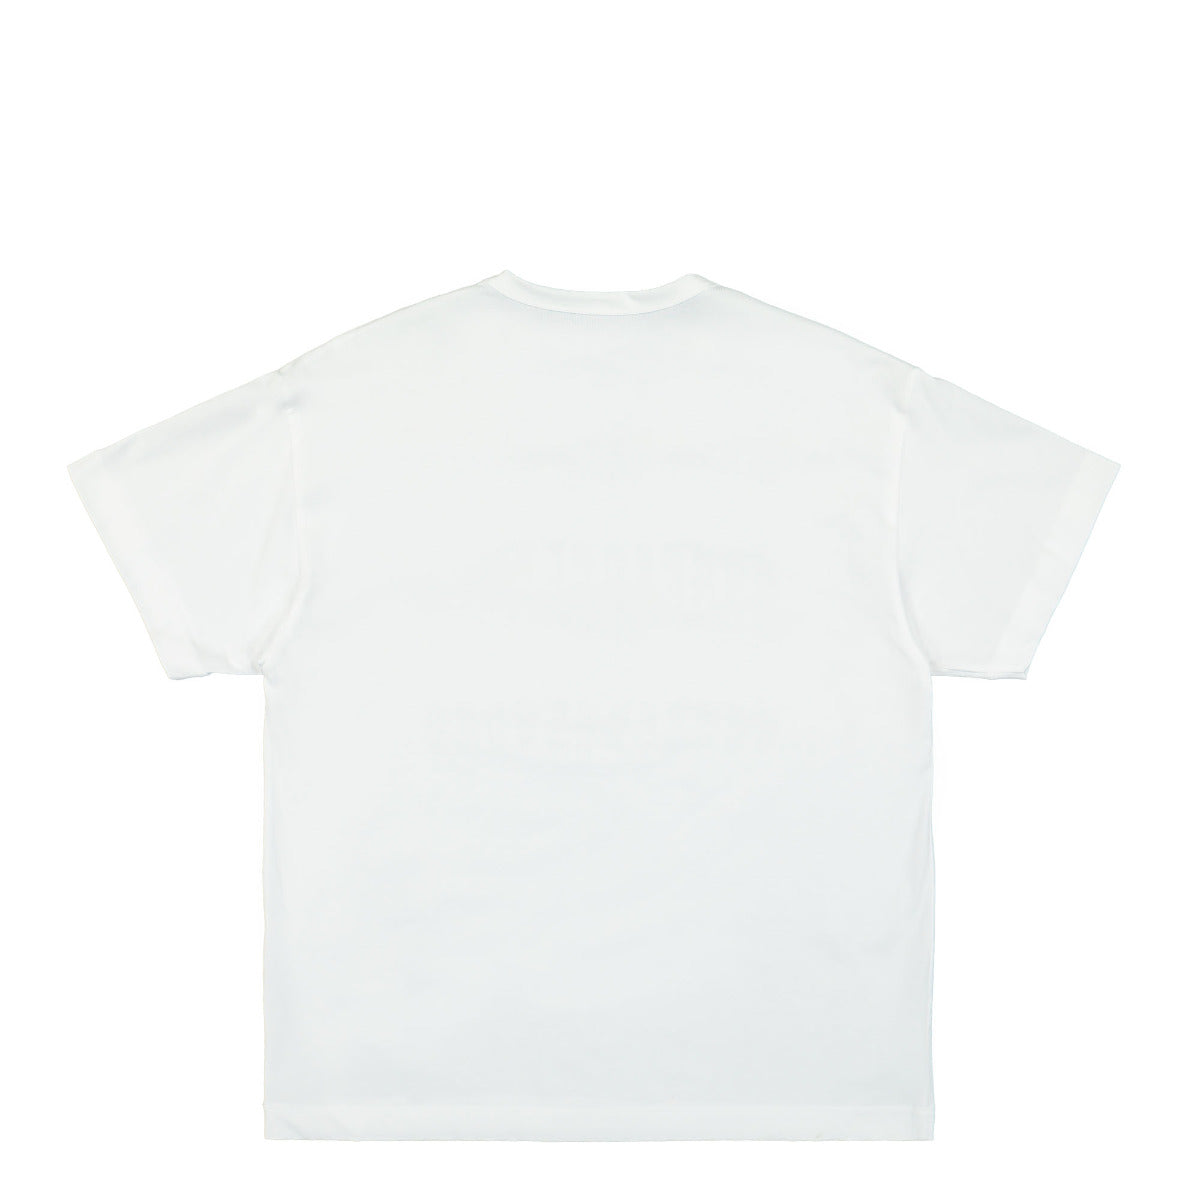 Phosphorescent Print T-Shirt